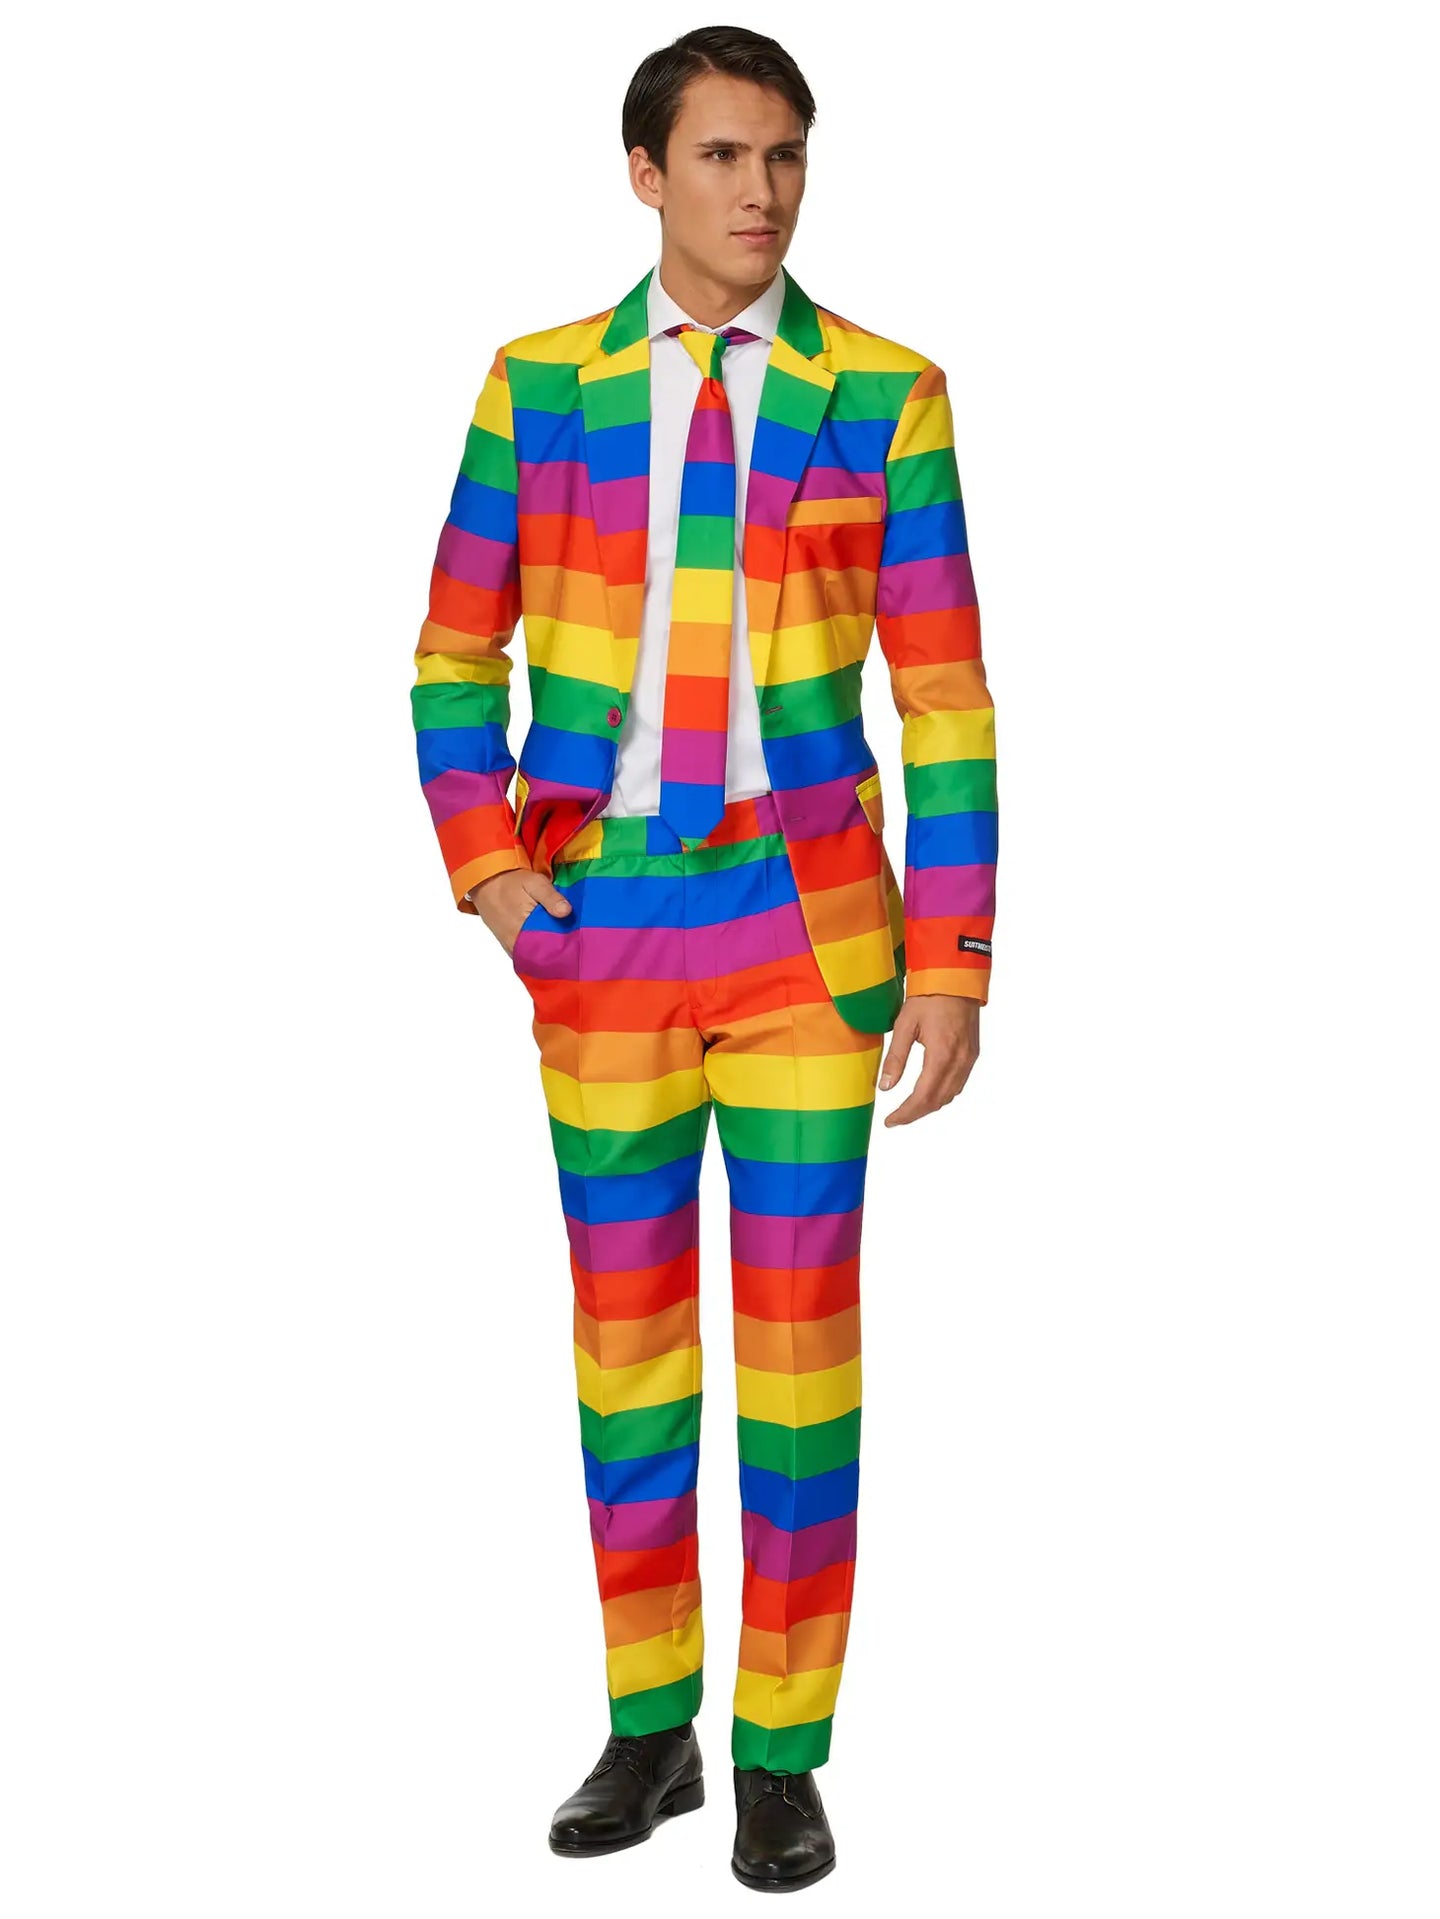 Men's Pride Suit Rainbow Incl Jacket, Pants and Tie